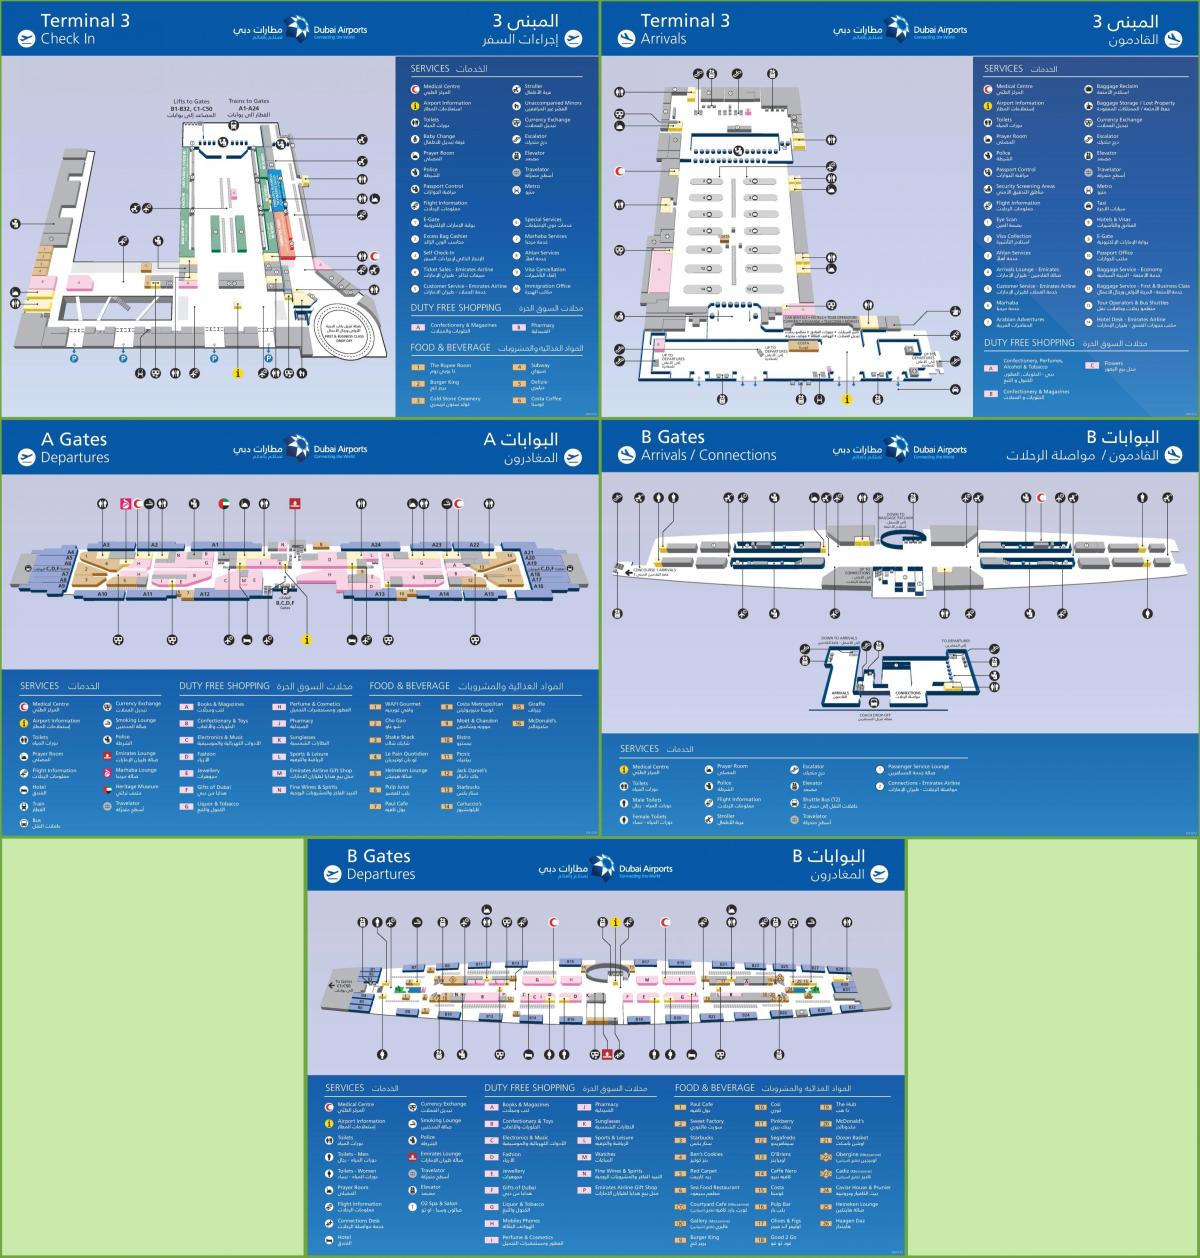 Dubai international airport terminal 3 mapa